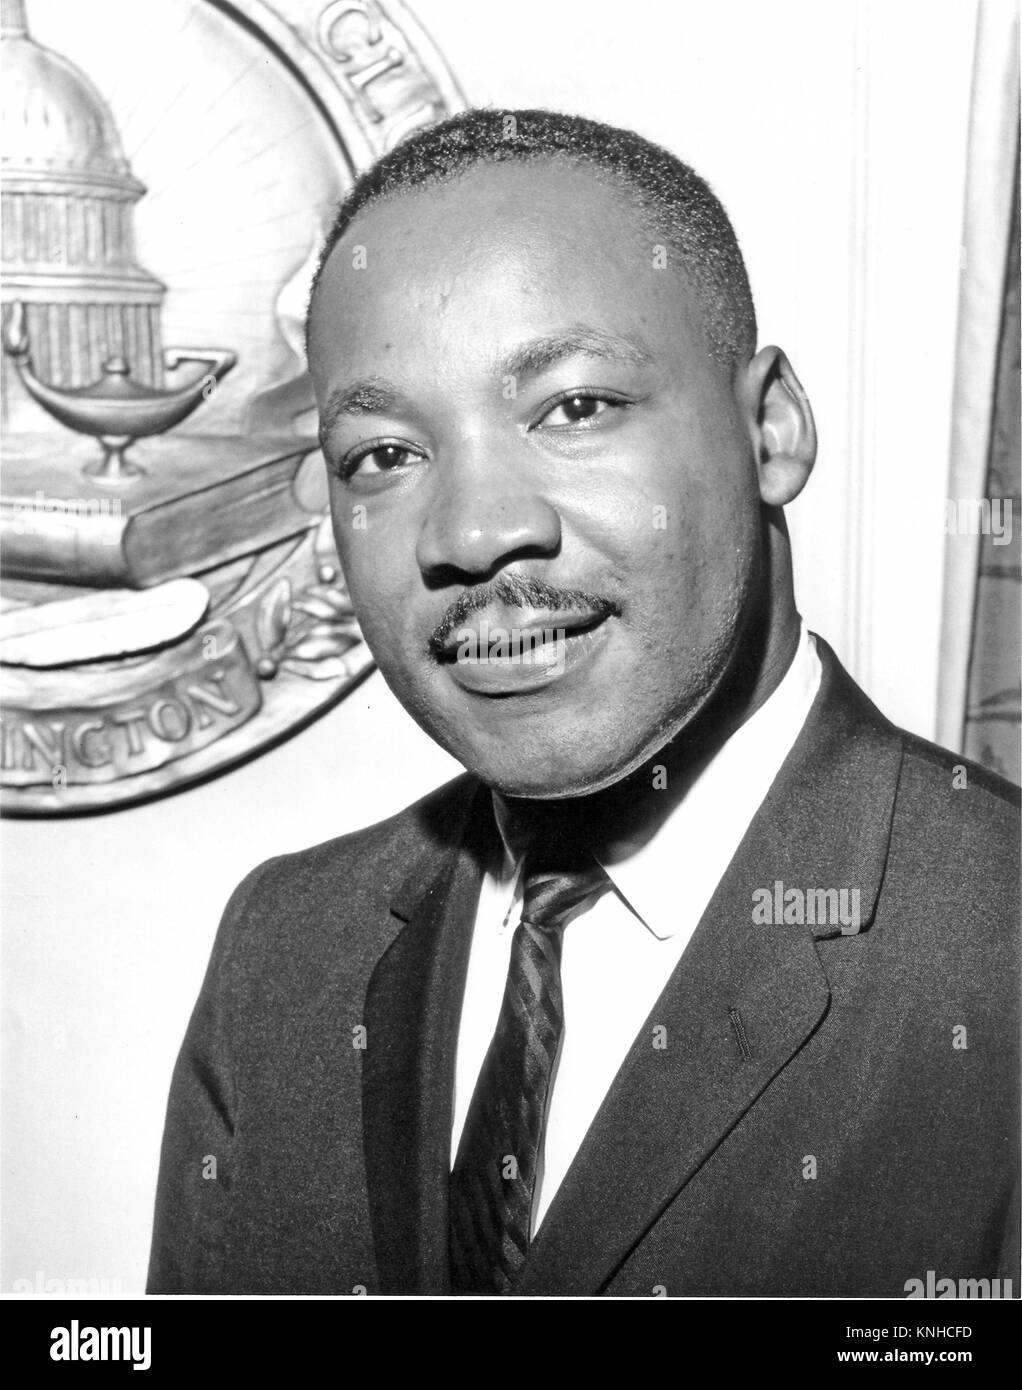 Washington, DC - (Datei) - Porträt von Reverend Doktor Martin Luther King, Jr. National Press Club in Washington, D.C. am 19. Juli 1962. Quelle: Benjamin E. 'Gene' Forte - CNP/MediaPunch Stockfoto